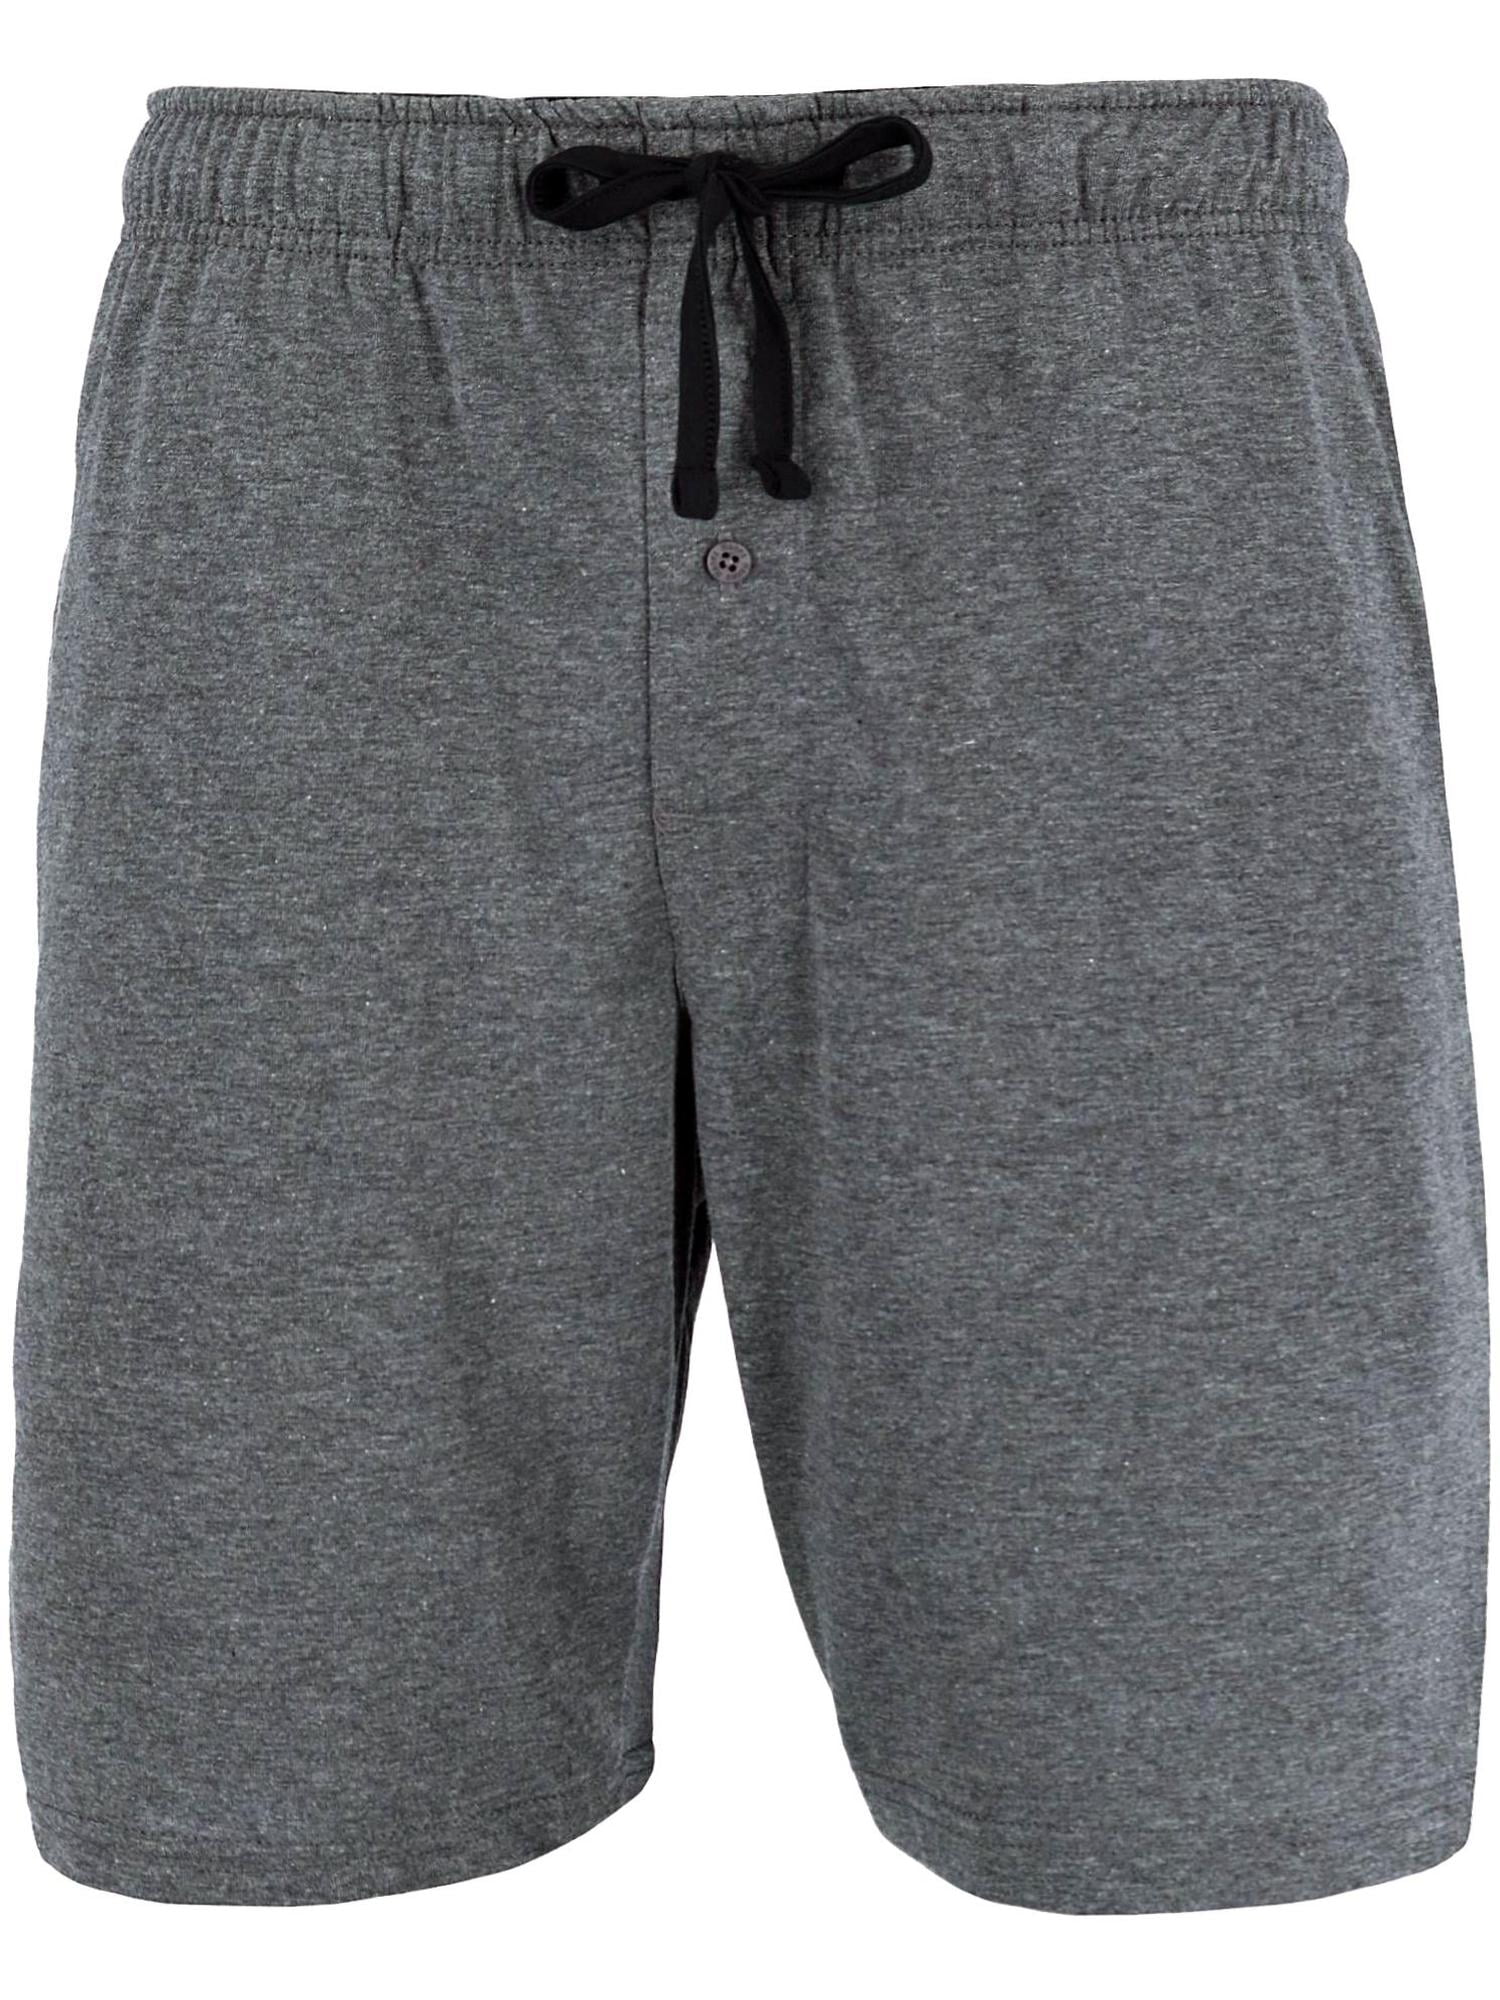 Hanes Knit Pajama Lounge Short with Side Pockets (Men Big & Tall ...